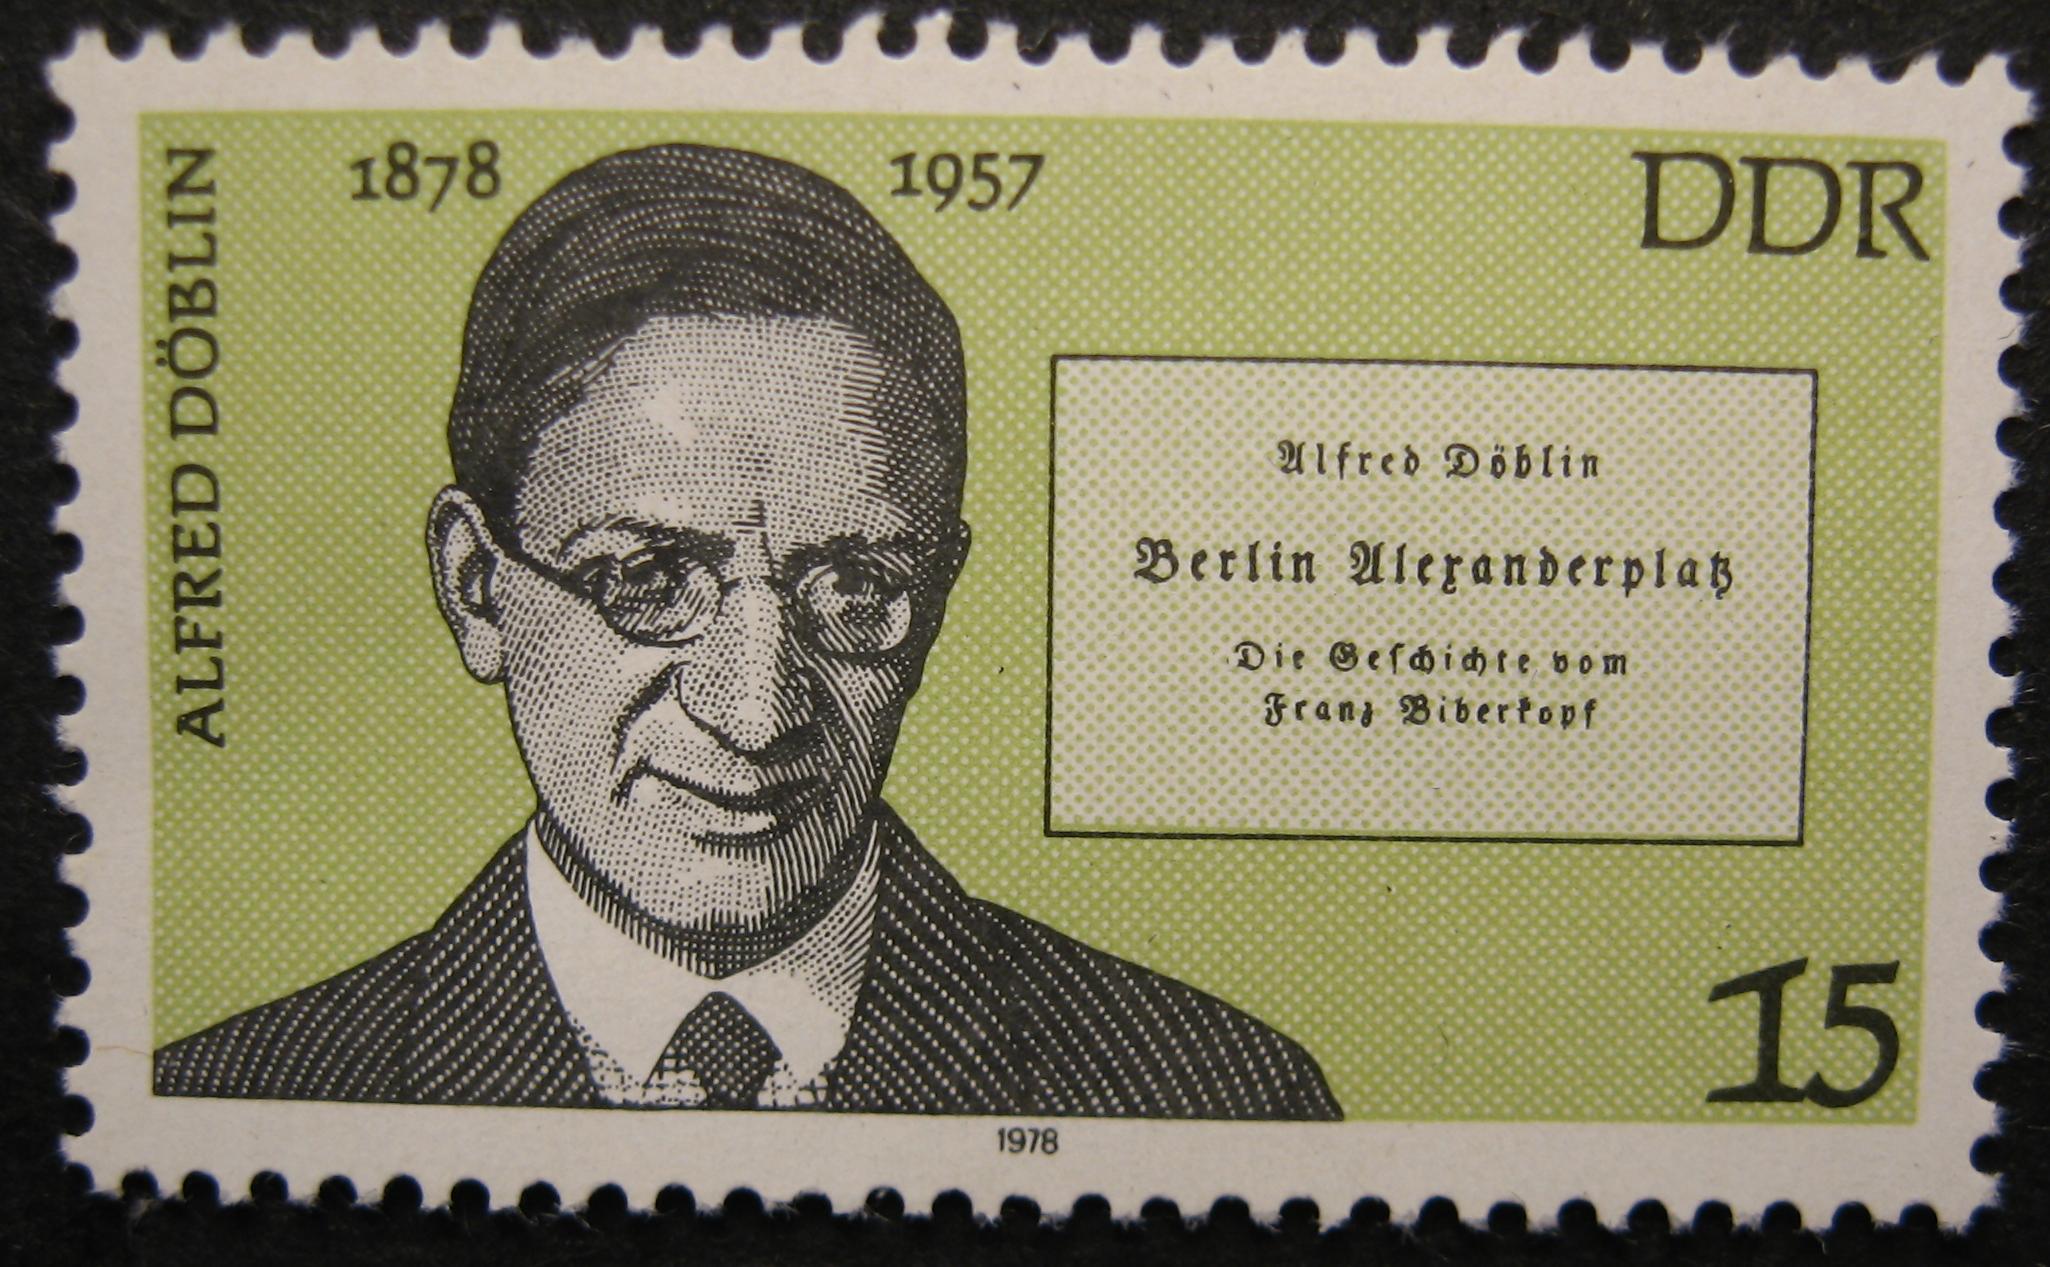 Alfred Döblin op een postzegel.